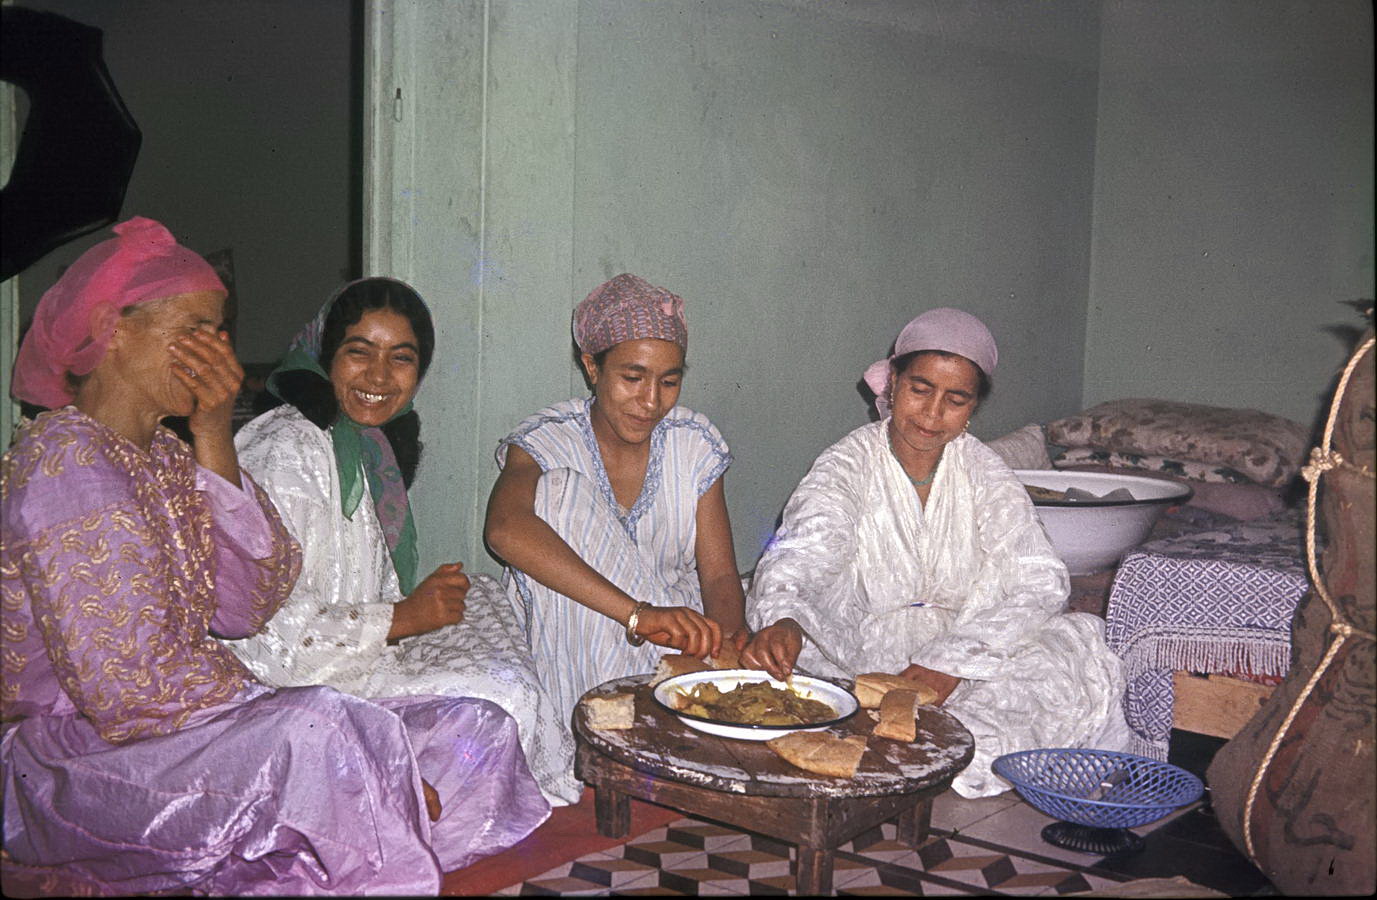 hochzeitsvorbereitung ahmed + fatna, casablanca, marokko 1968